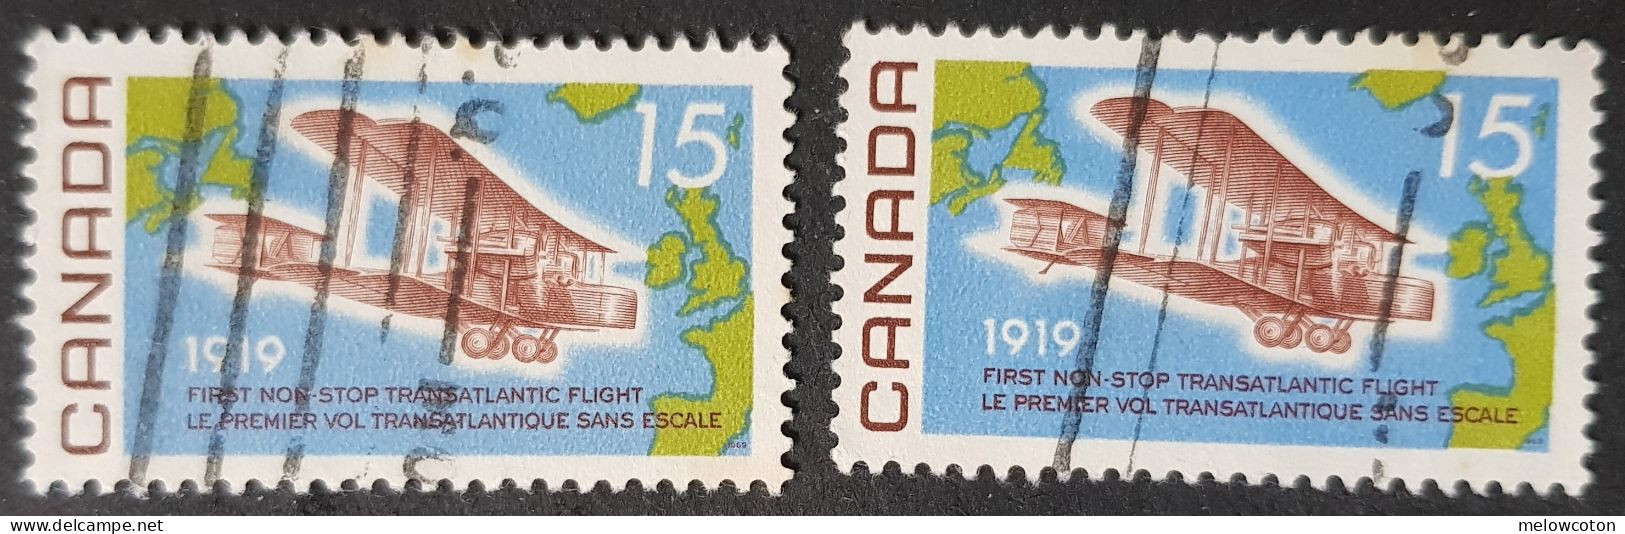 Lot CANADA - Poste Aérienne